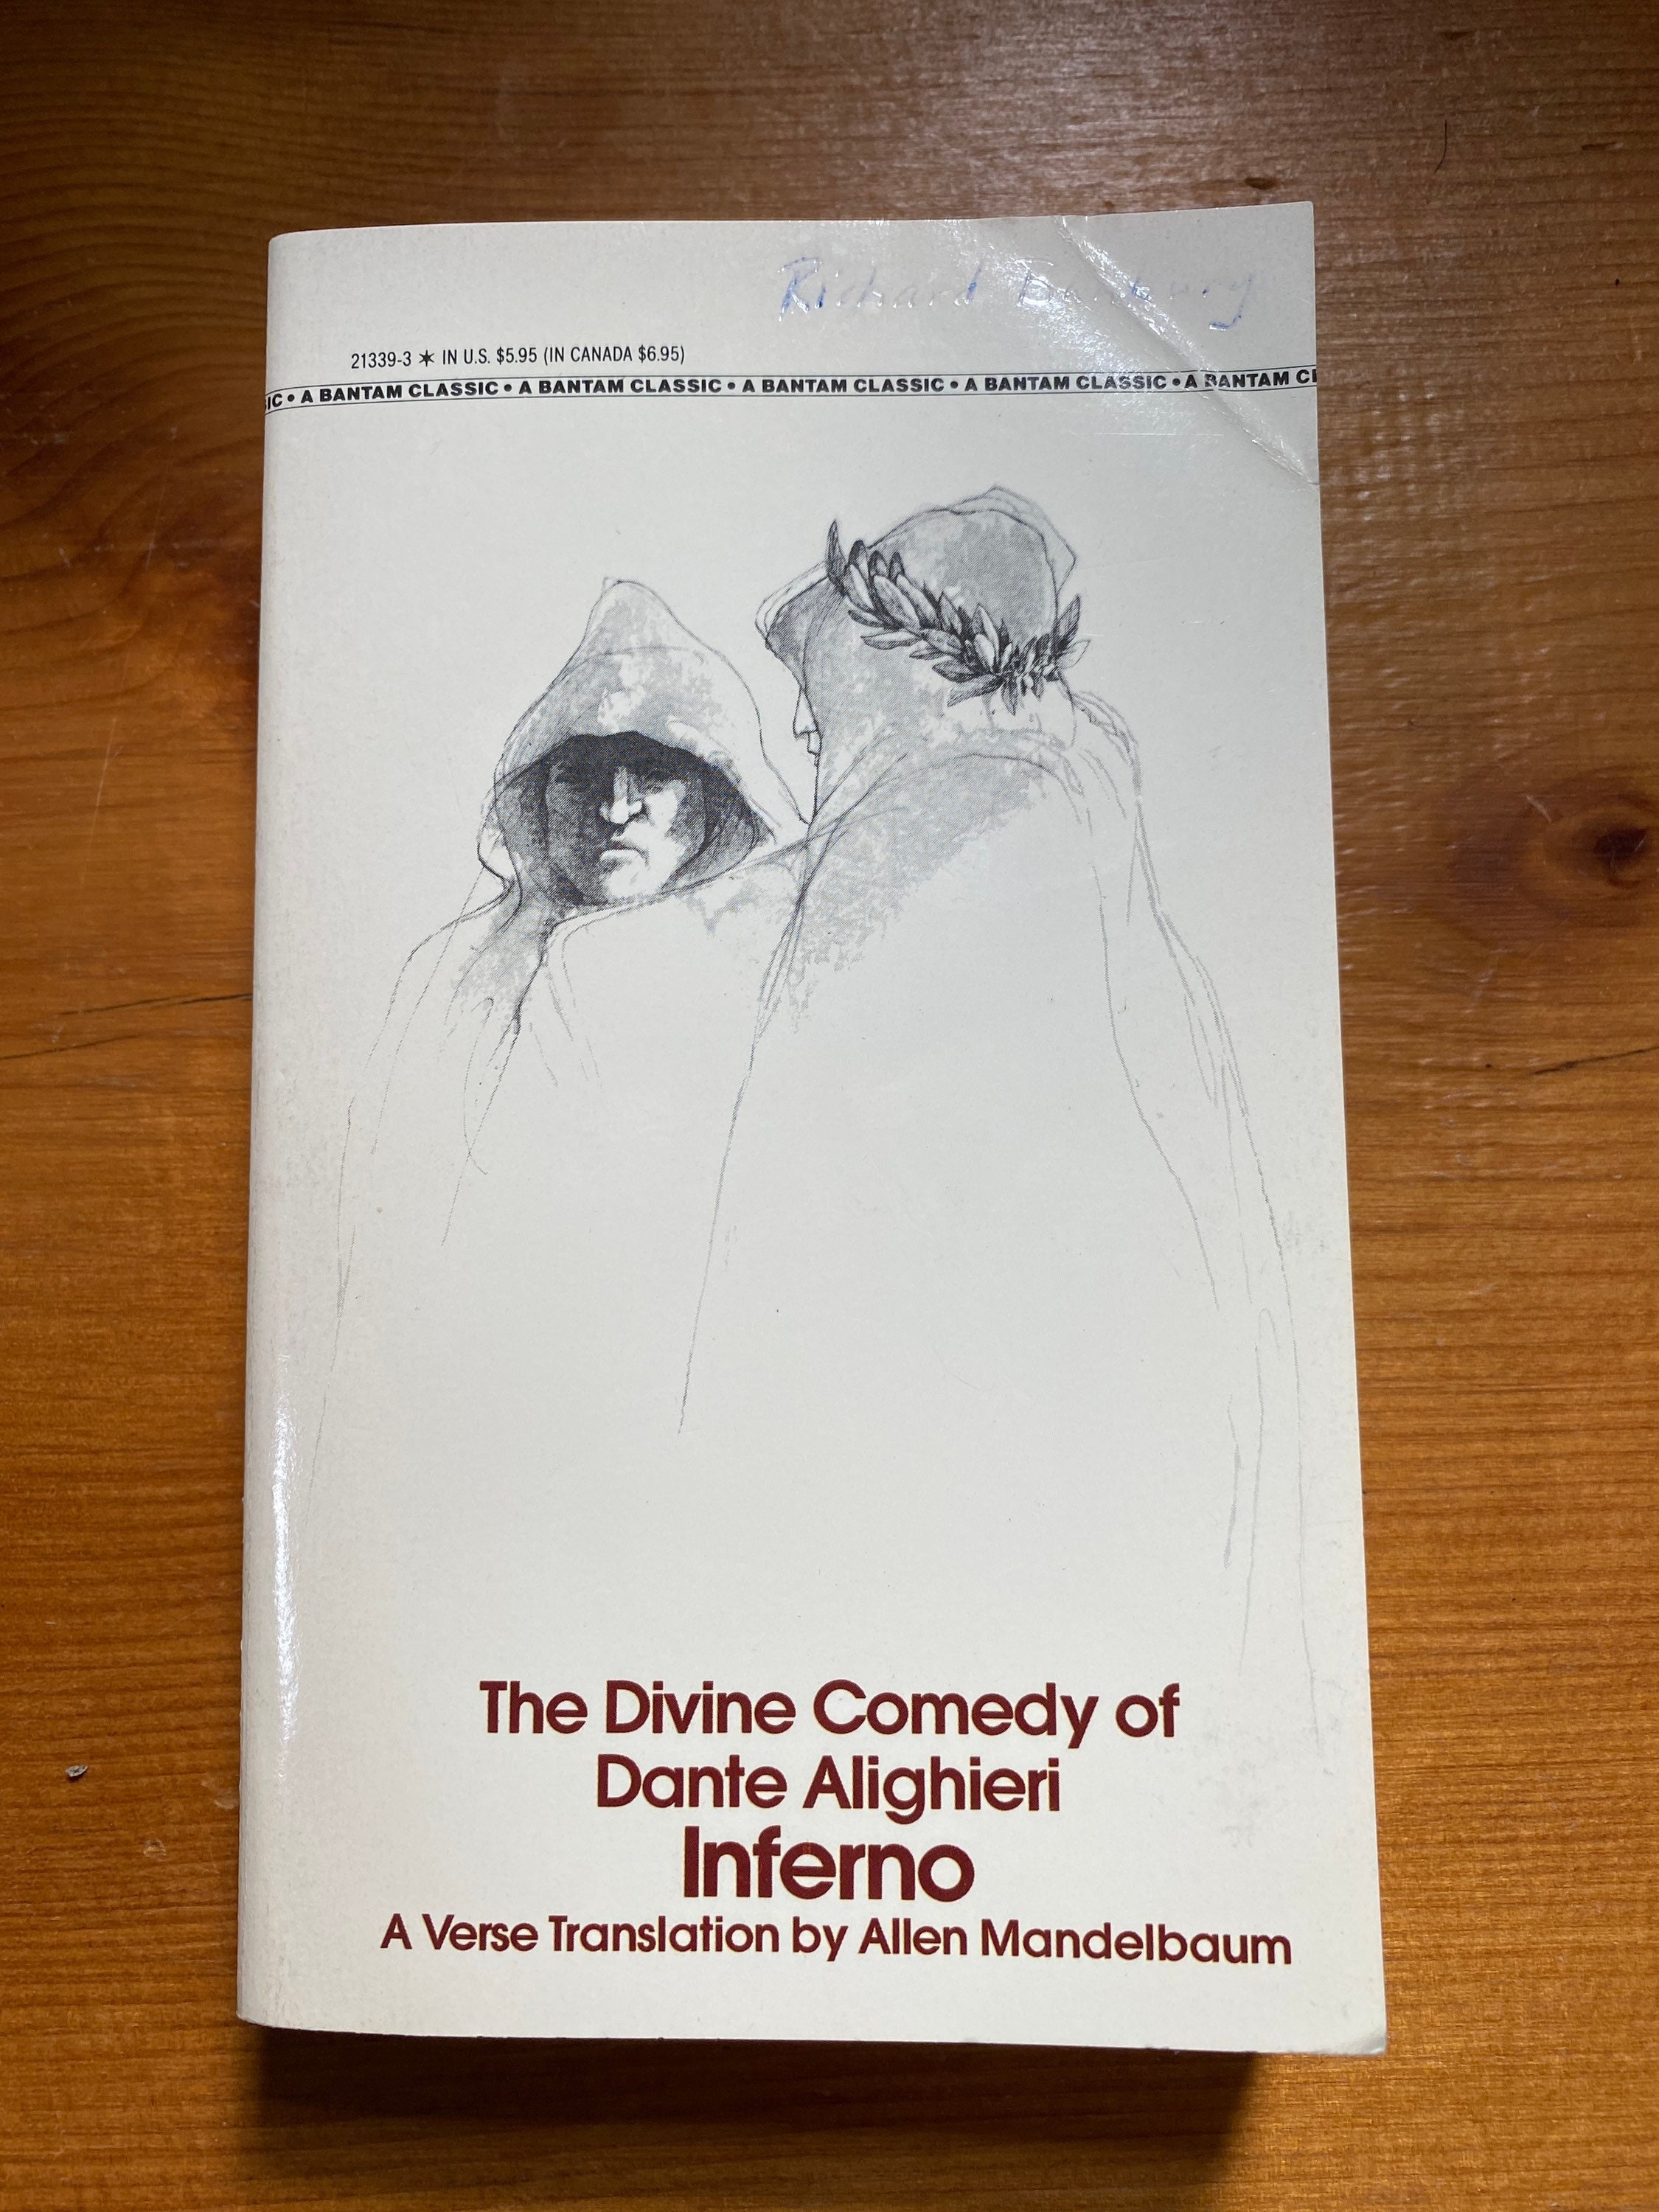 Dantes Inferno by Dante Alighieri Illustrated Vintage Book -  Israel